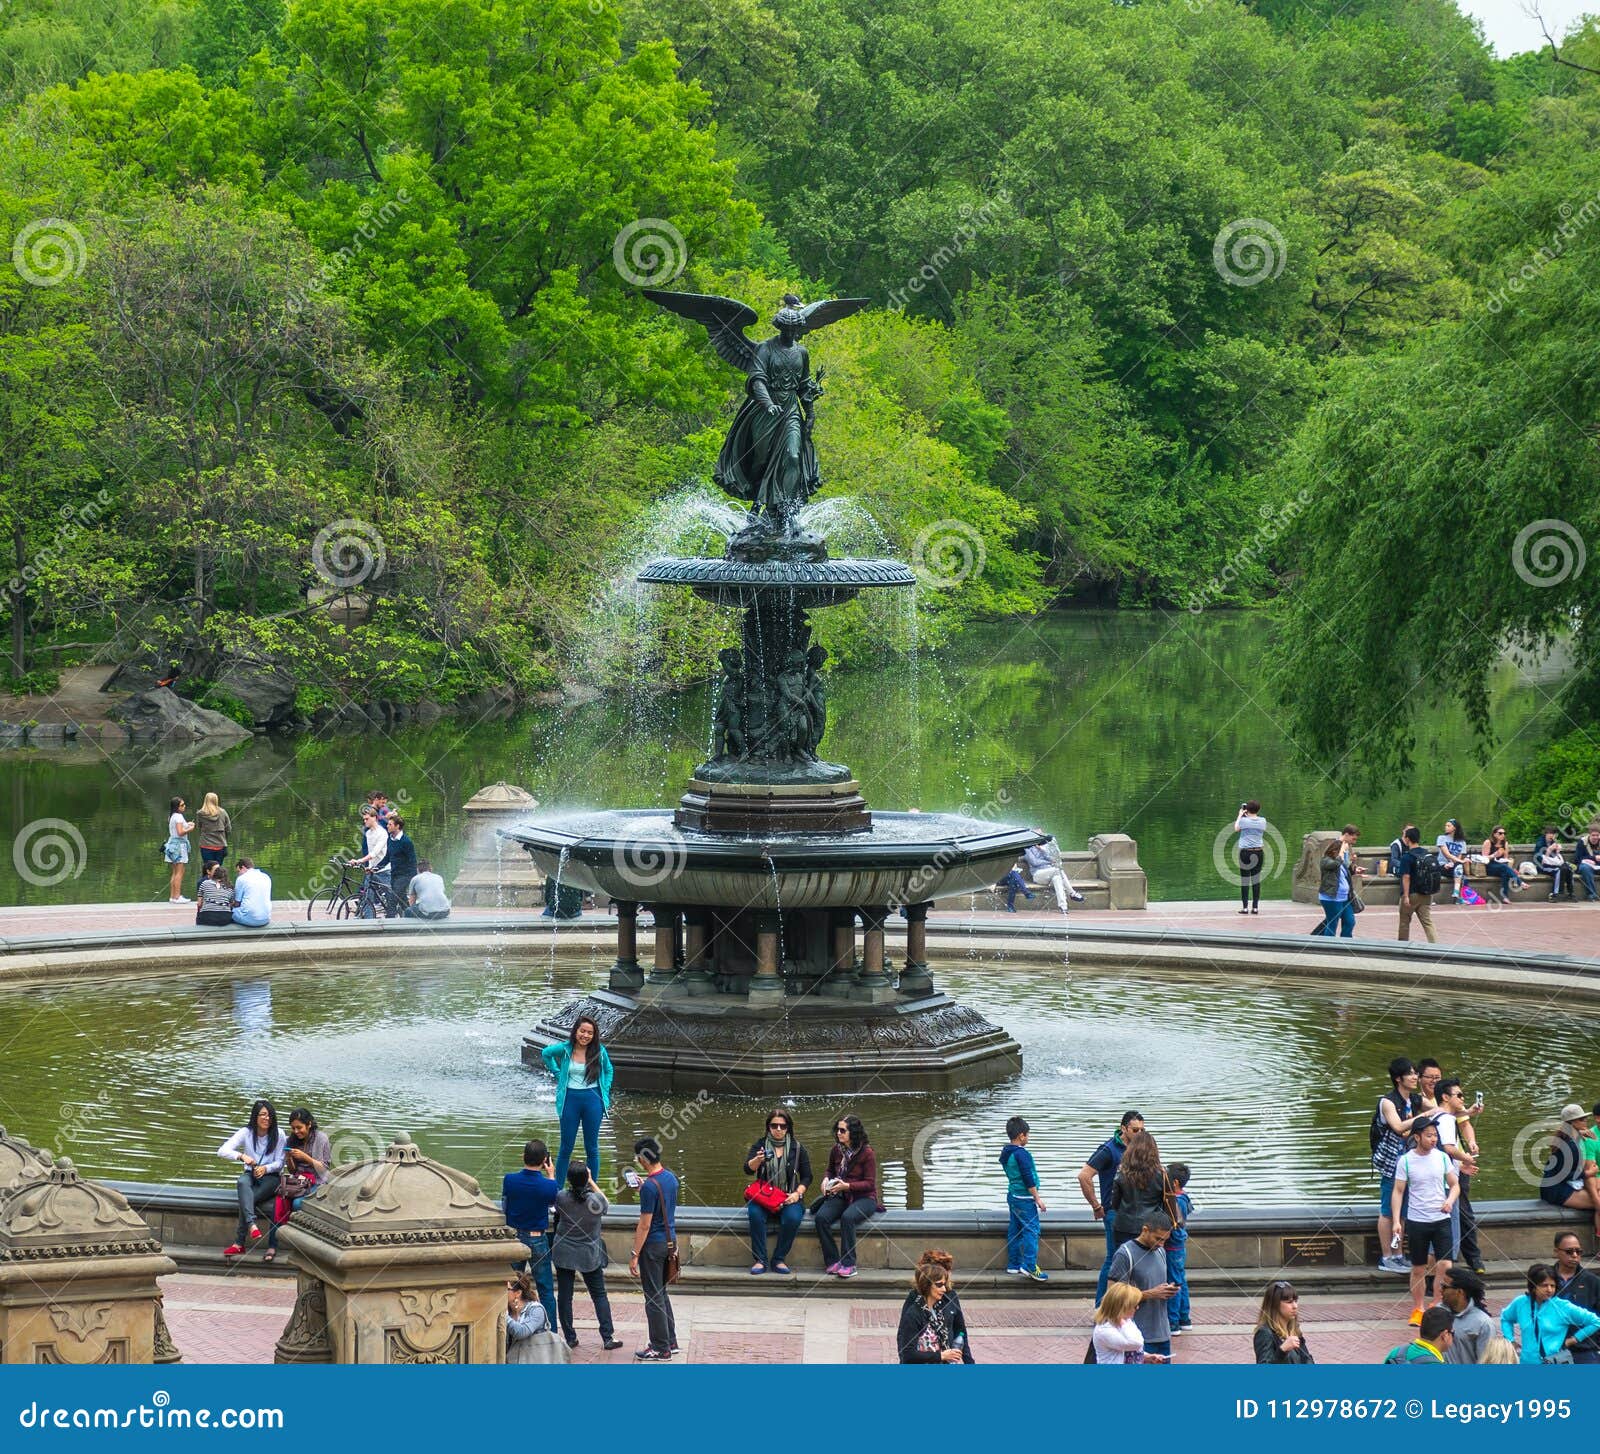 Photo: Central Park's Bethesda Fountain Is Back On! - Gothamist